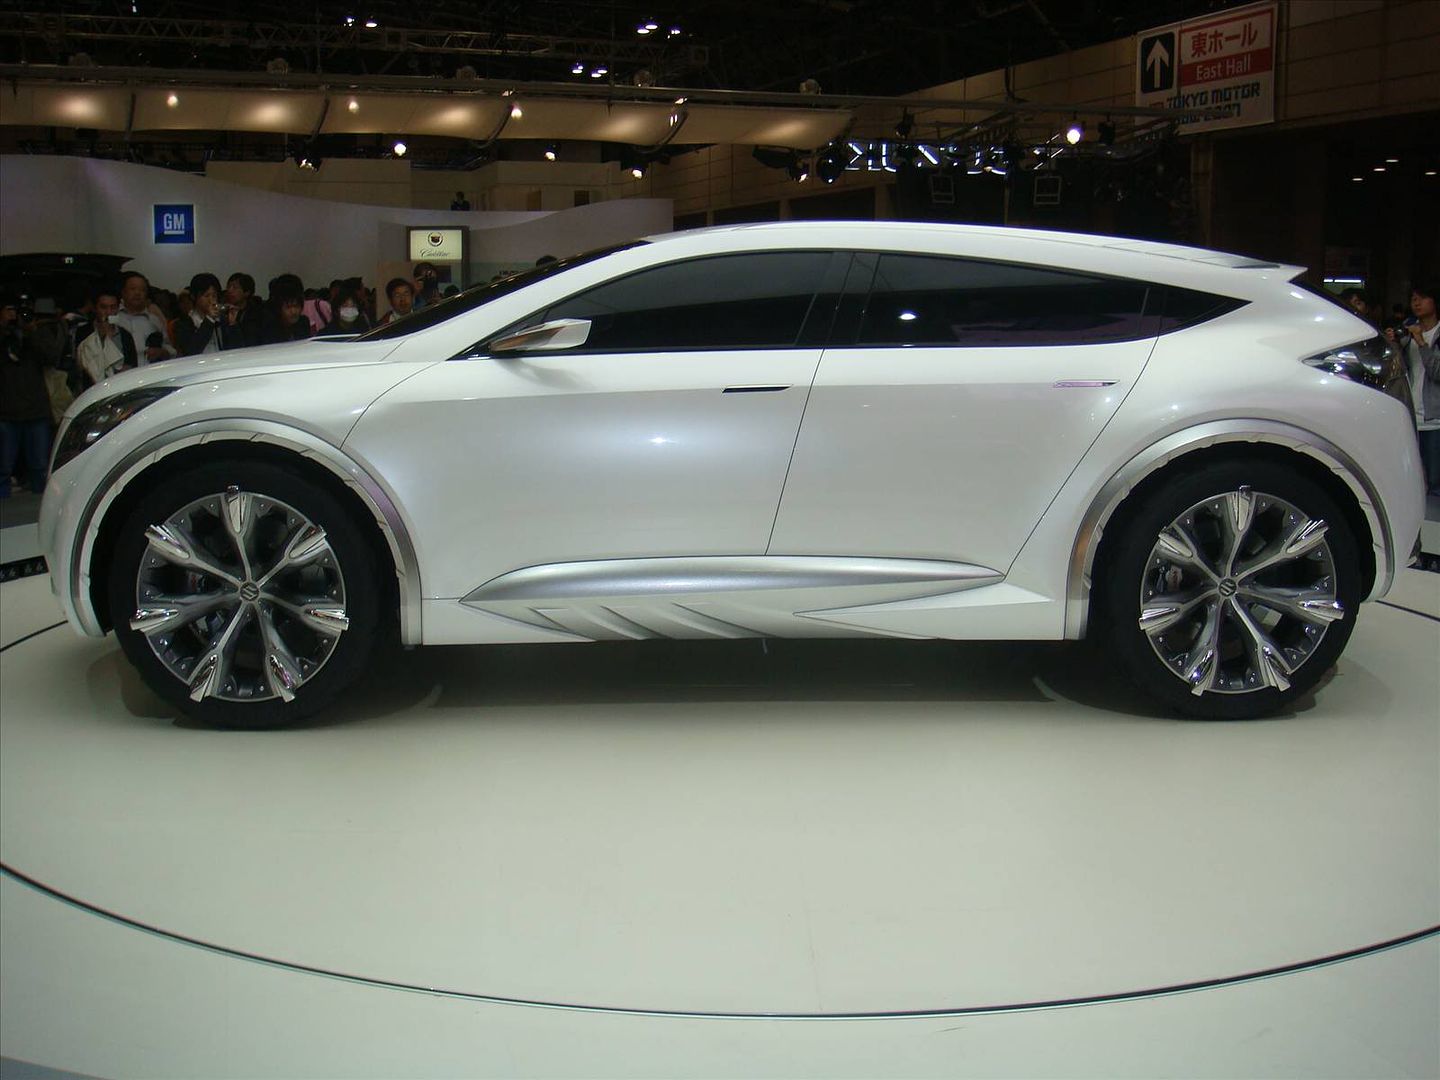 Lexus Concept Car Pictures, Images and Photos